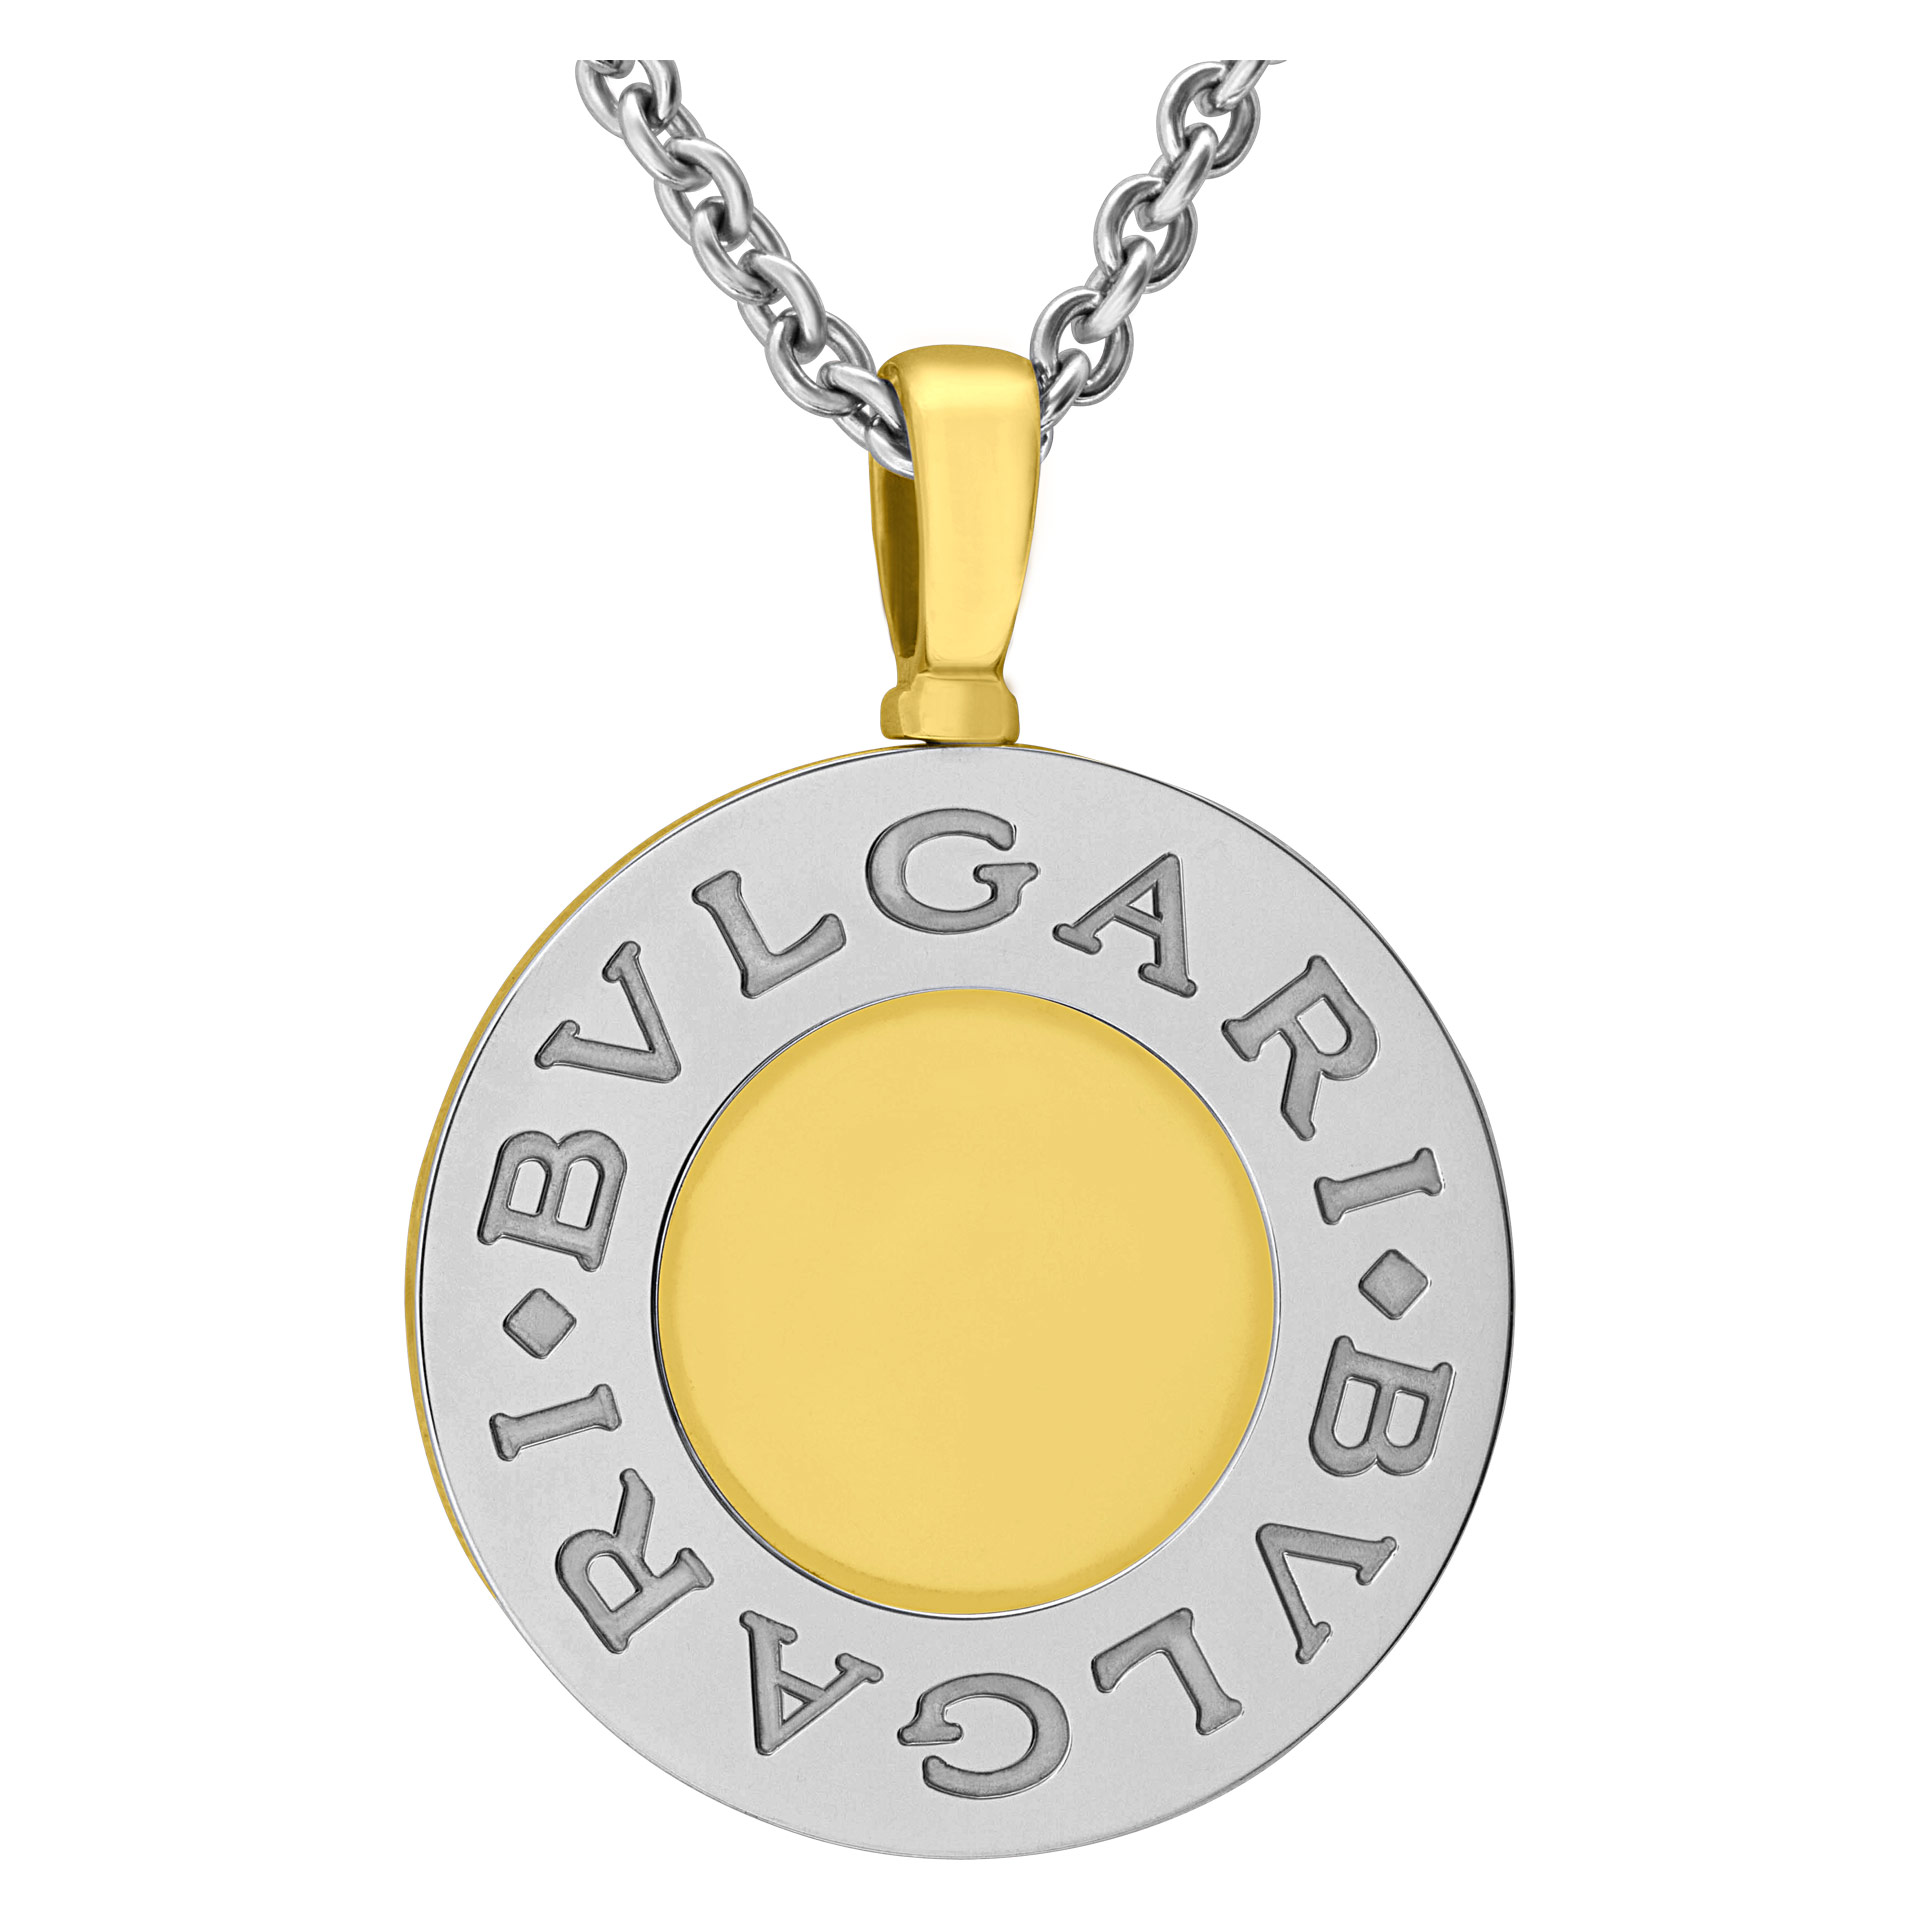 Bvlgari 18k white and yellow gold reversible large necklace on Bvlgari chain